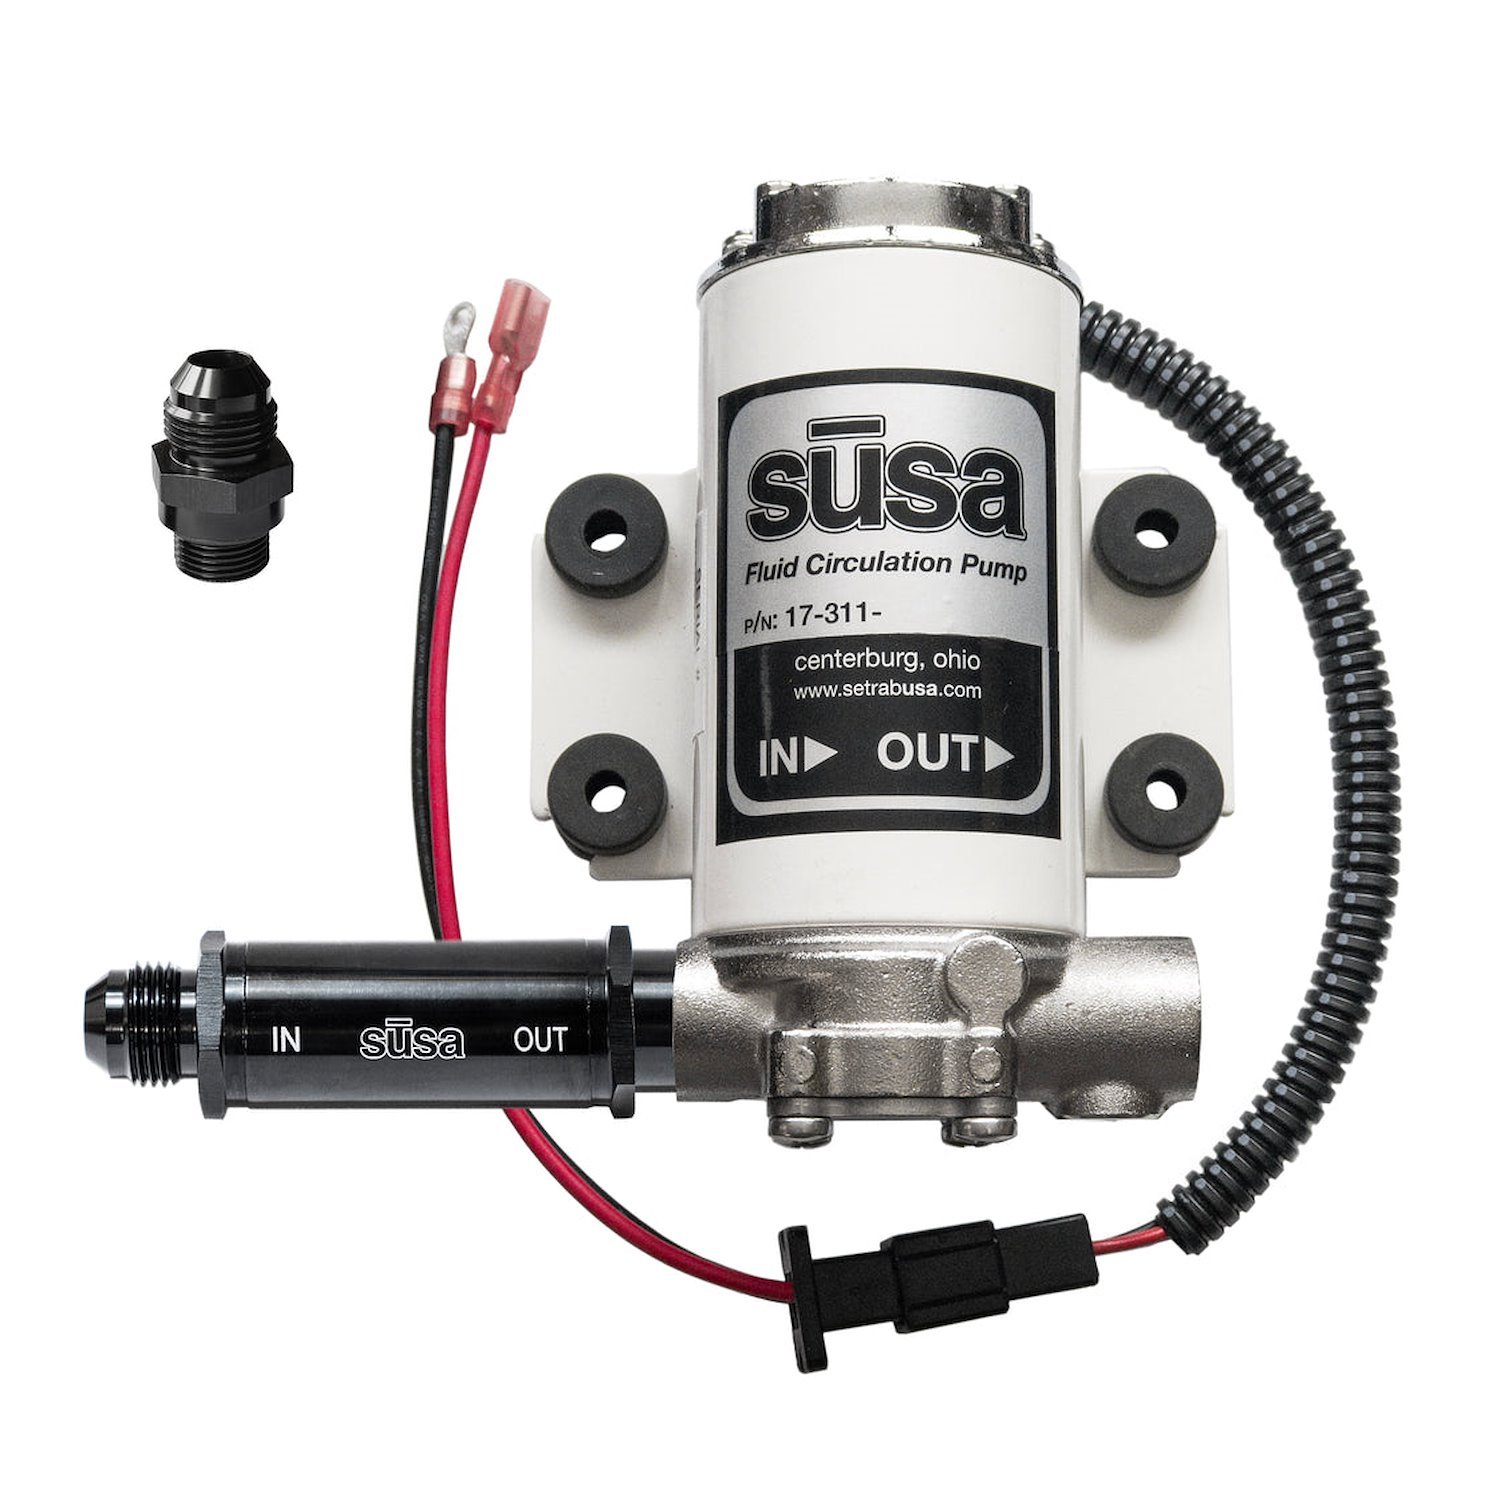 17-311-10-IF05 Mini Gear Oil Circulation Pump, Fluid Pump w/ AN10 Fitting & AN10 Filter